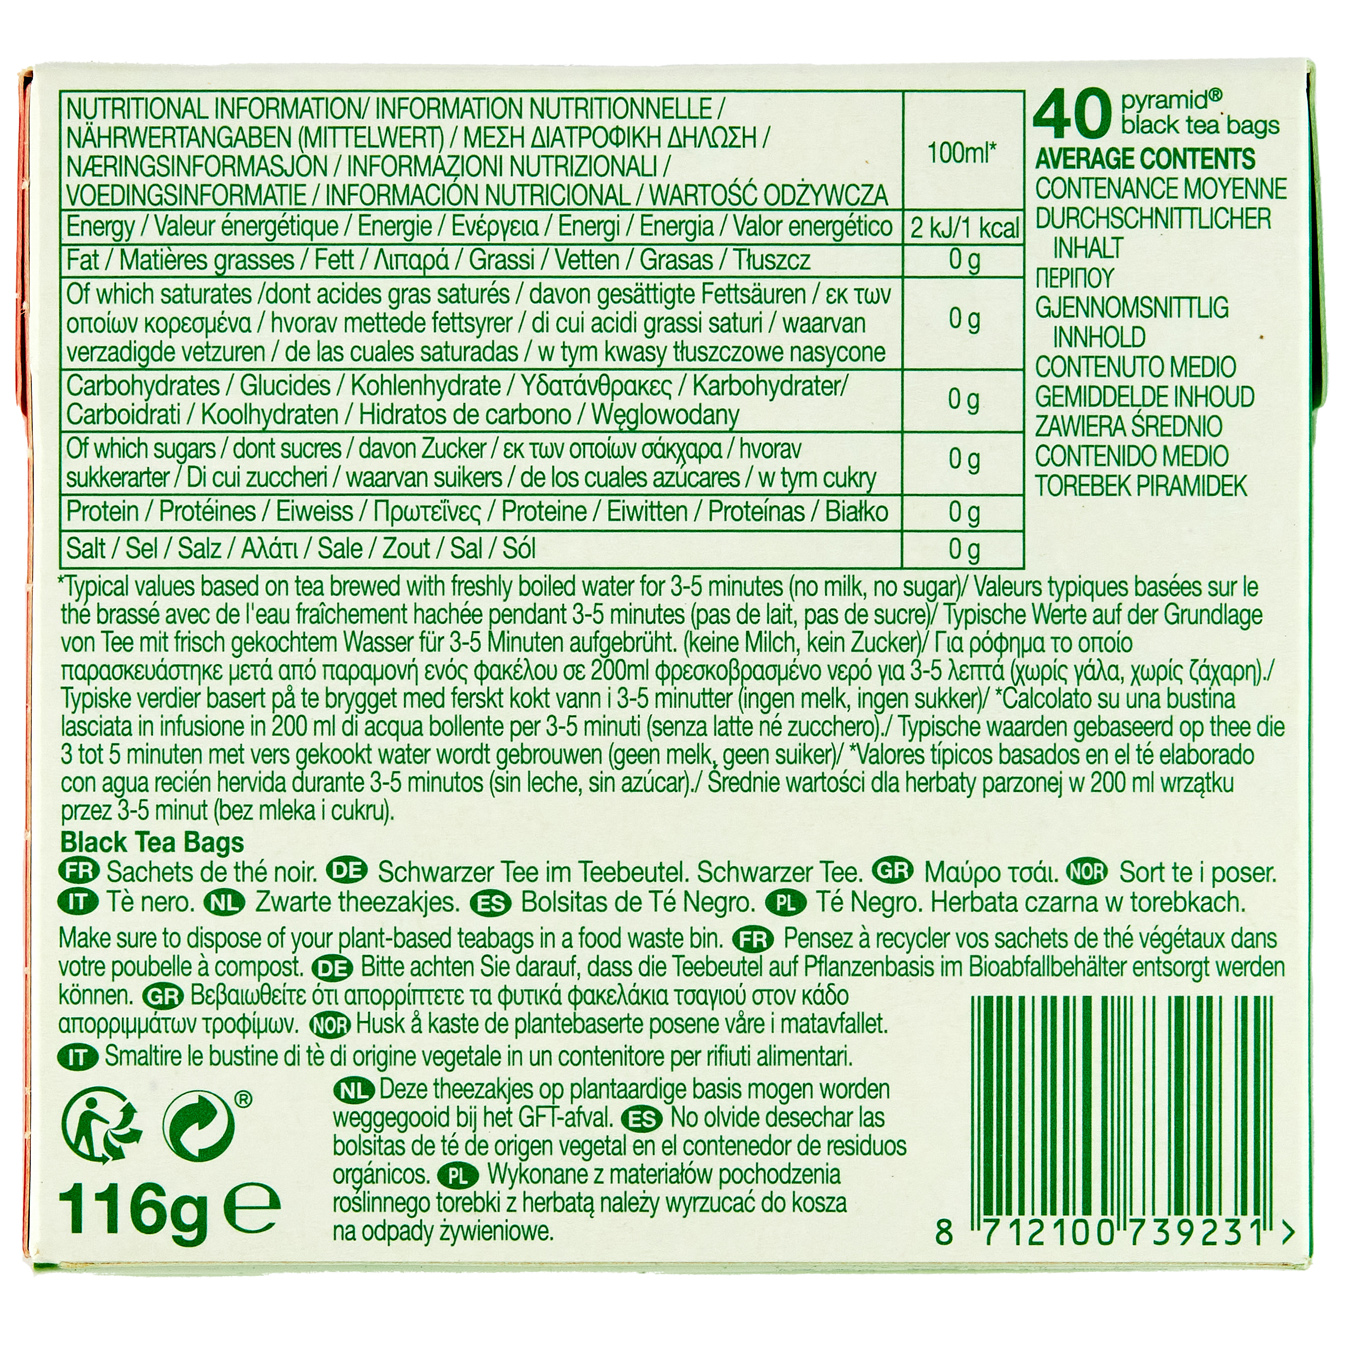 PG Tips green tea original 40 bags 2